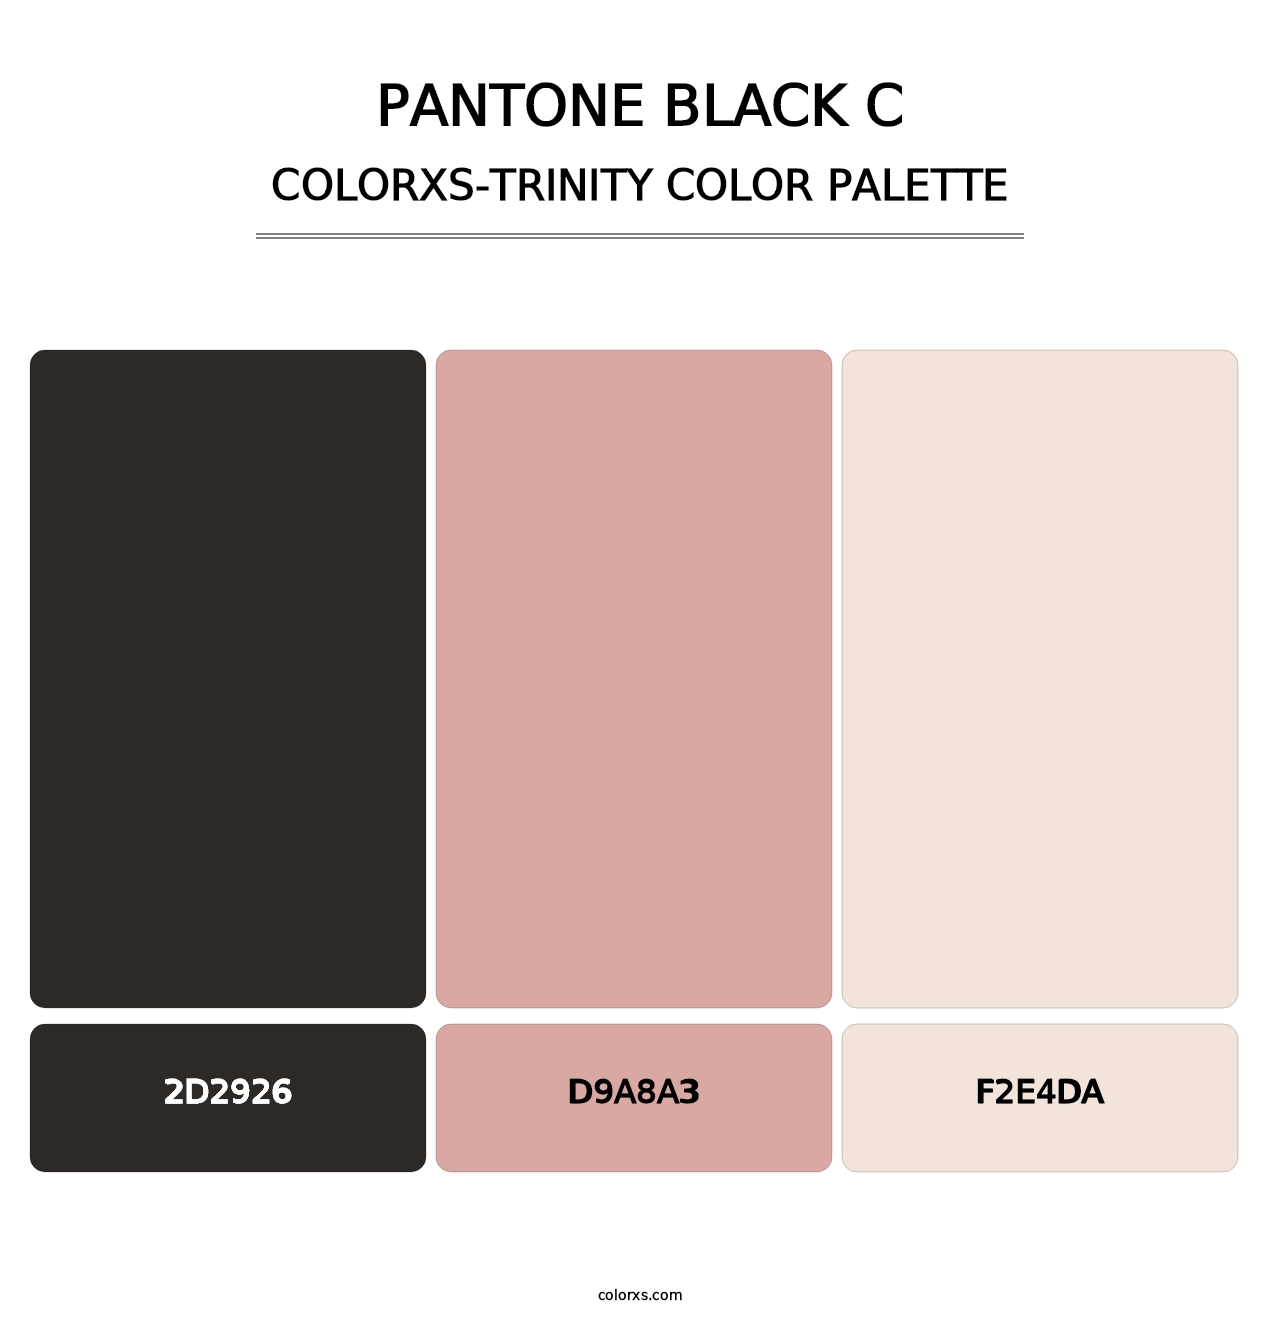 PANTONE Black C - Colorxs Trinity Palette